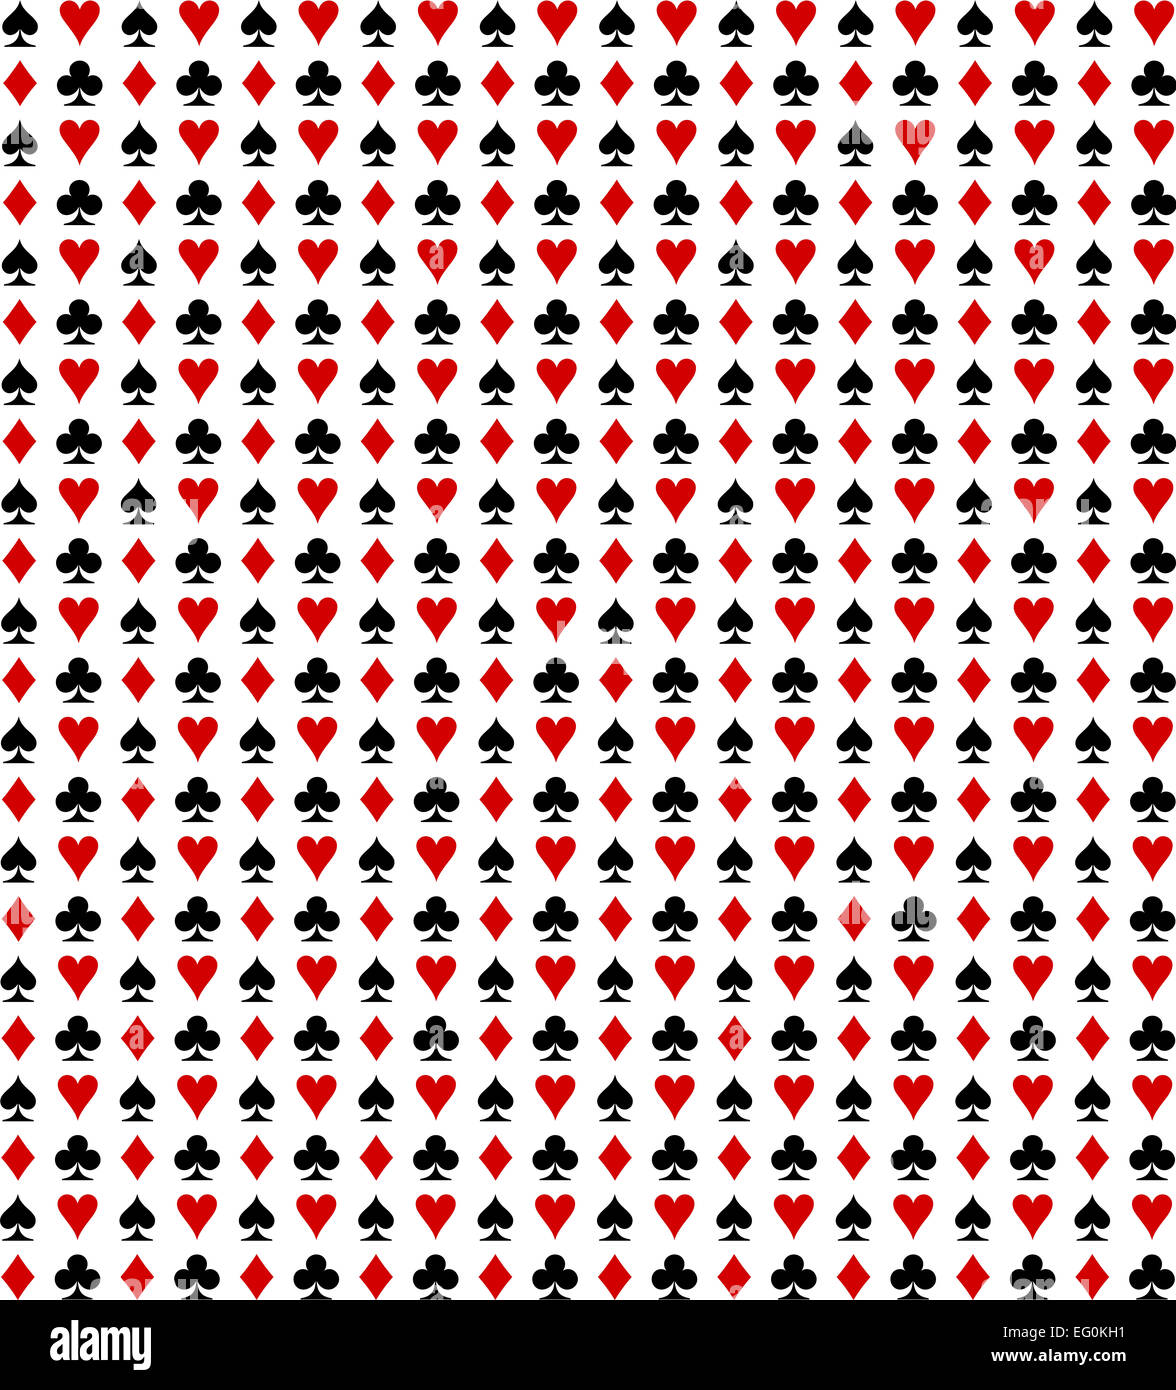 casino game poker cards symbol pattern texture Stock Photo - Alamy